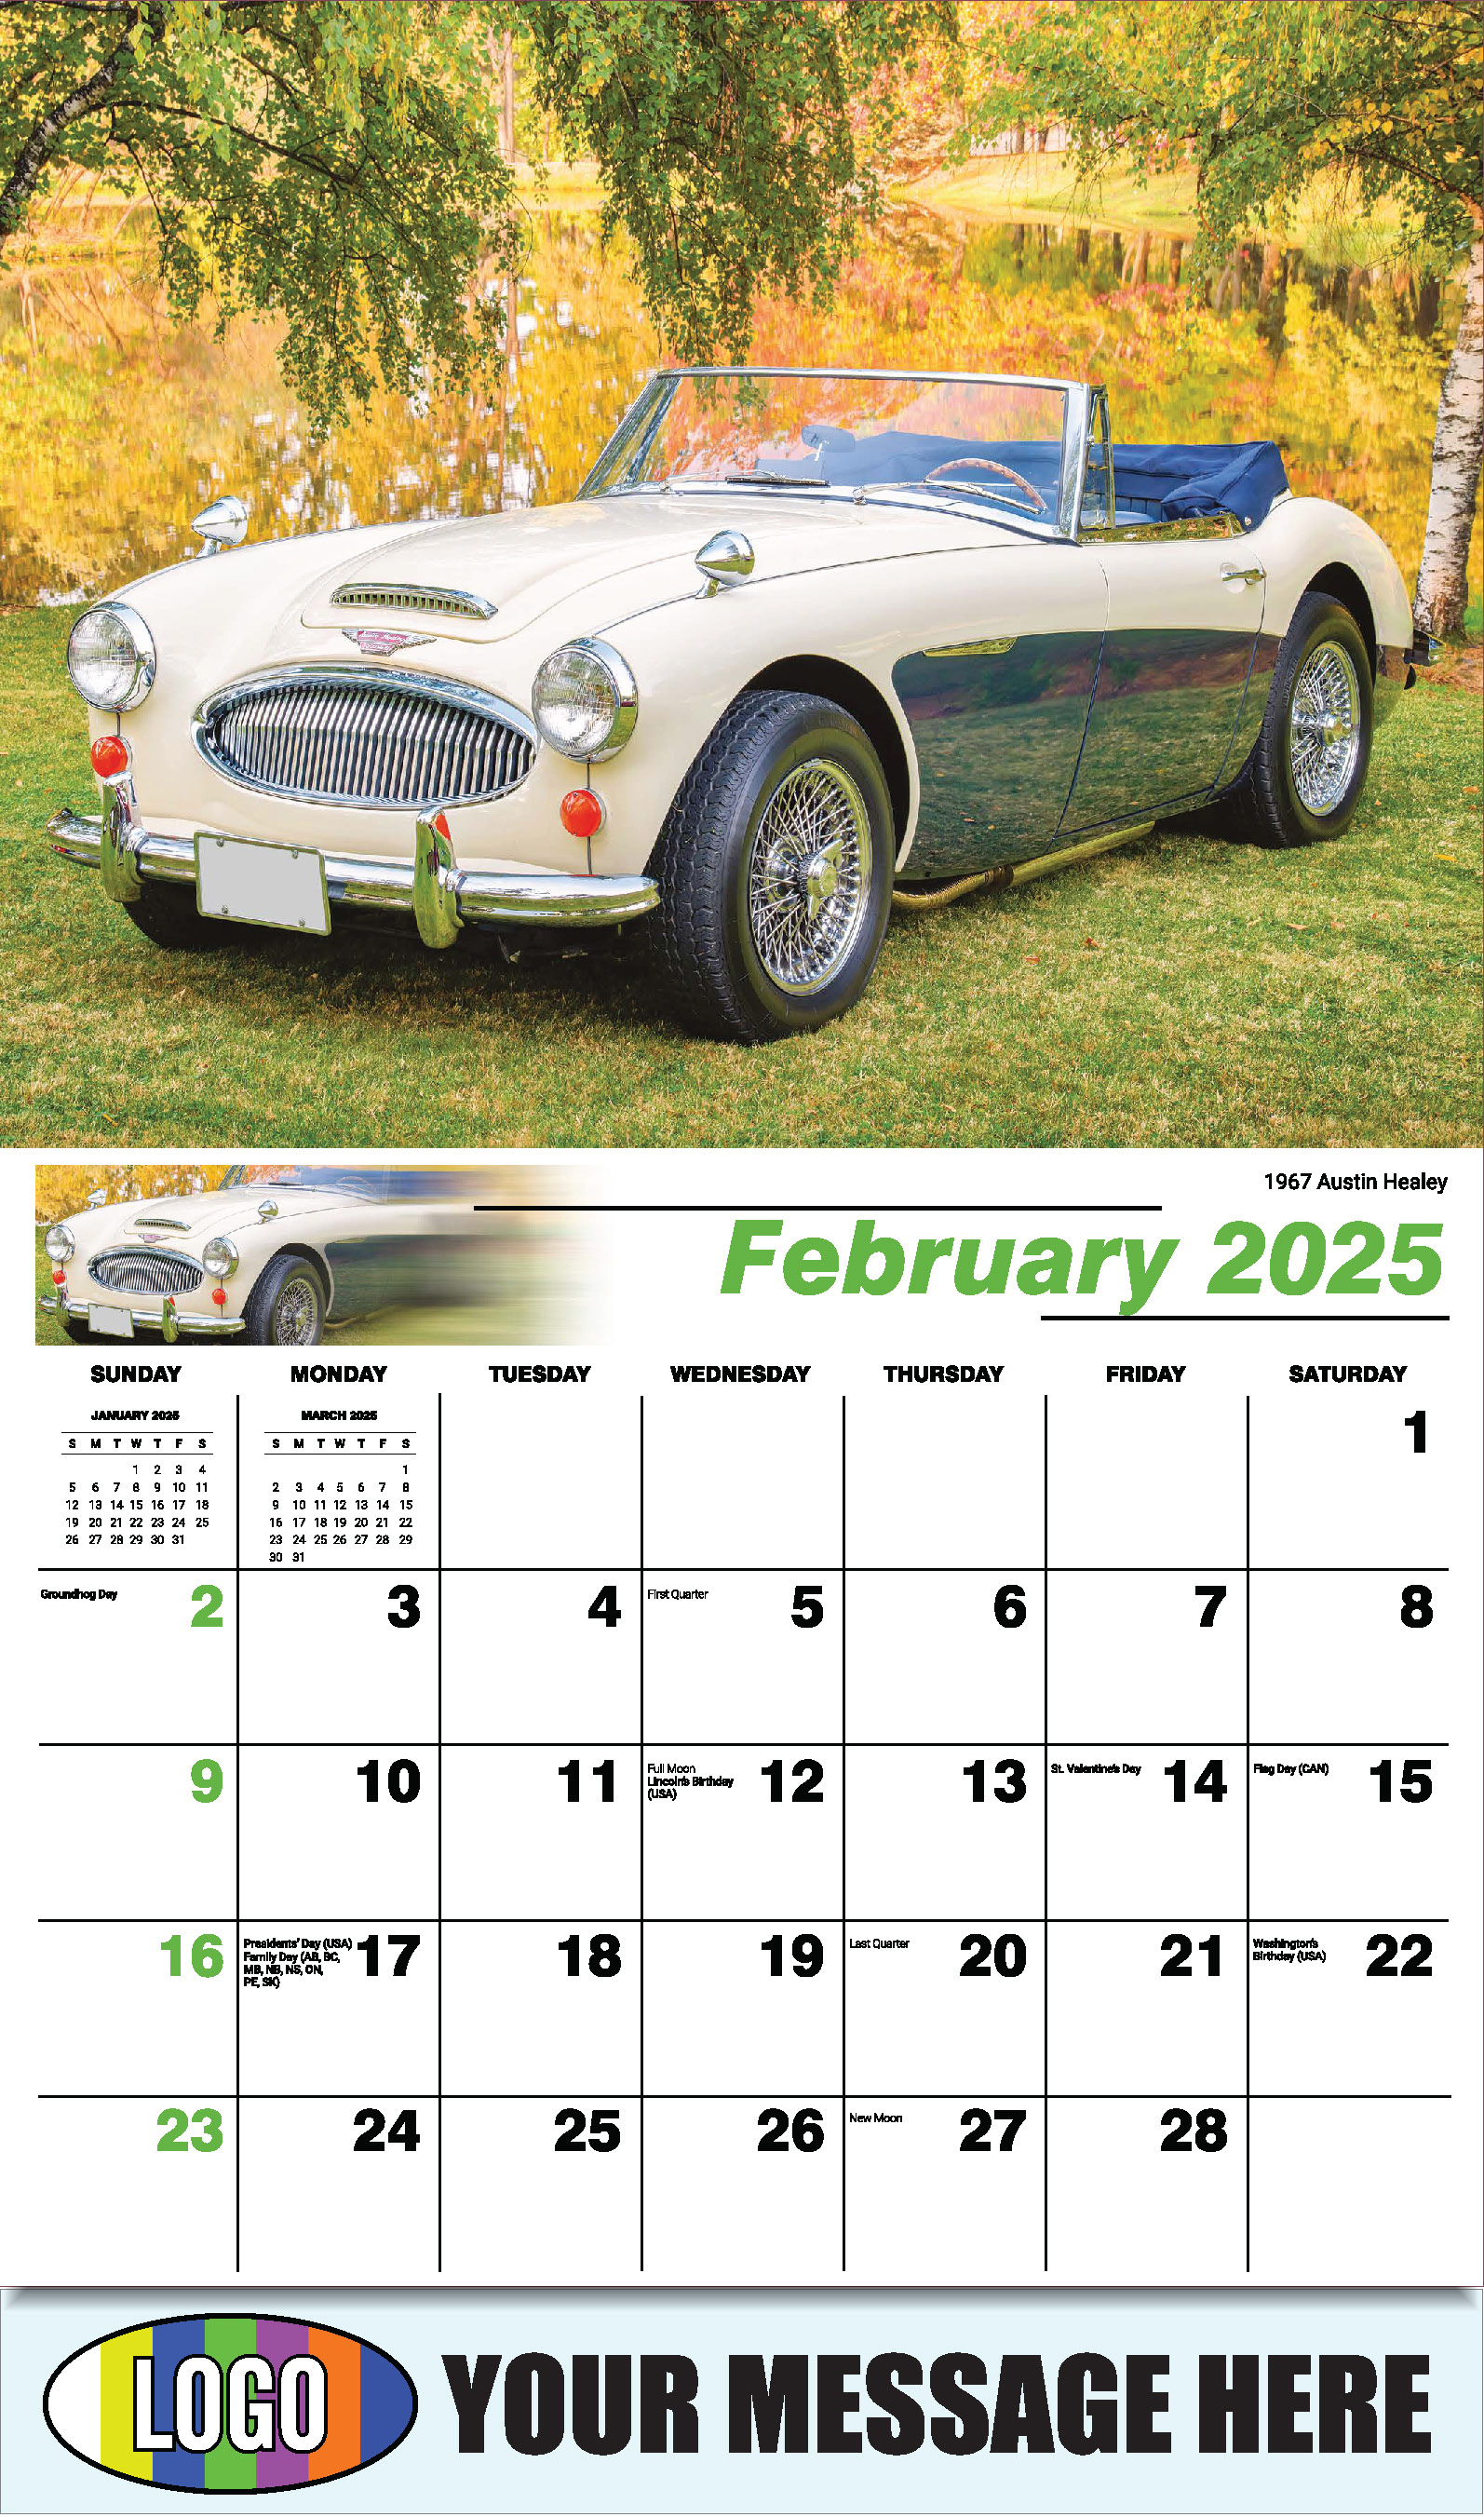 Classic Cars 2025 Automotive Business Promo Calendar - February